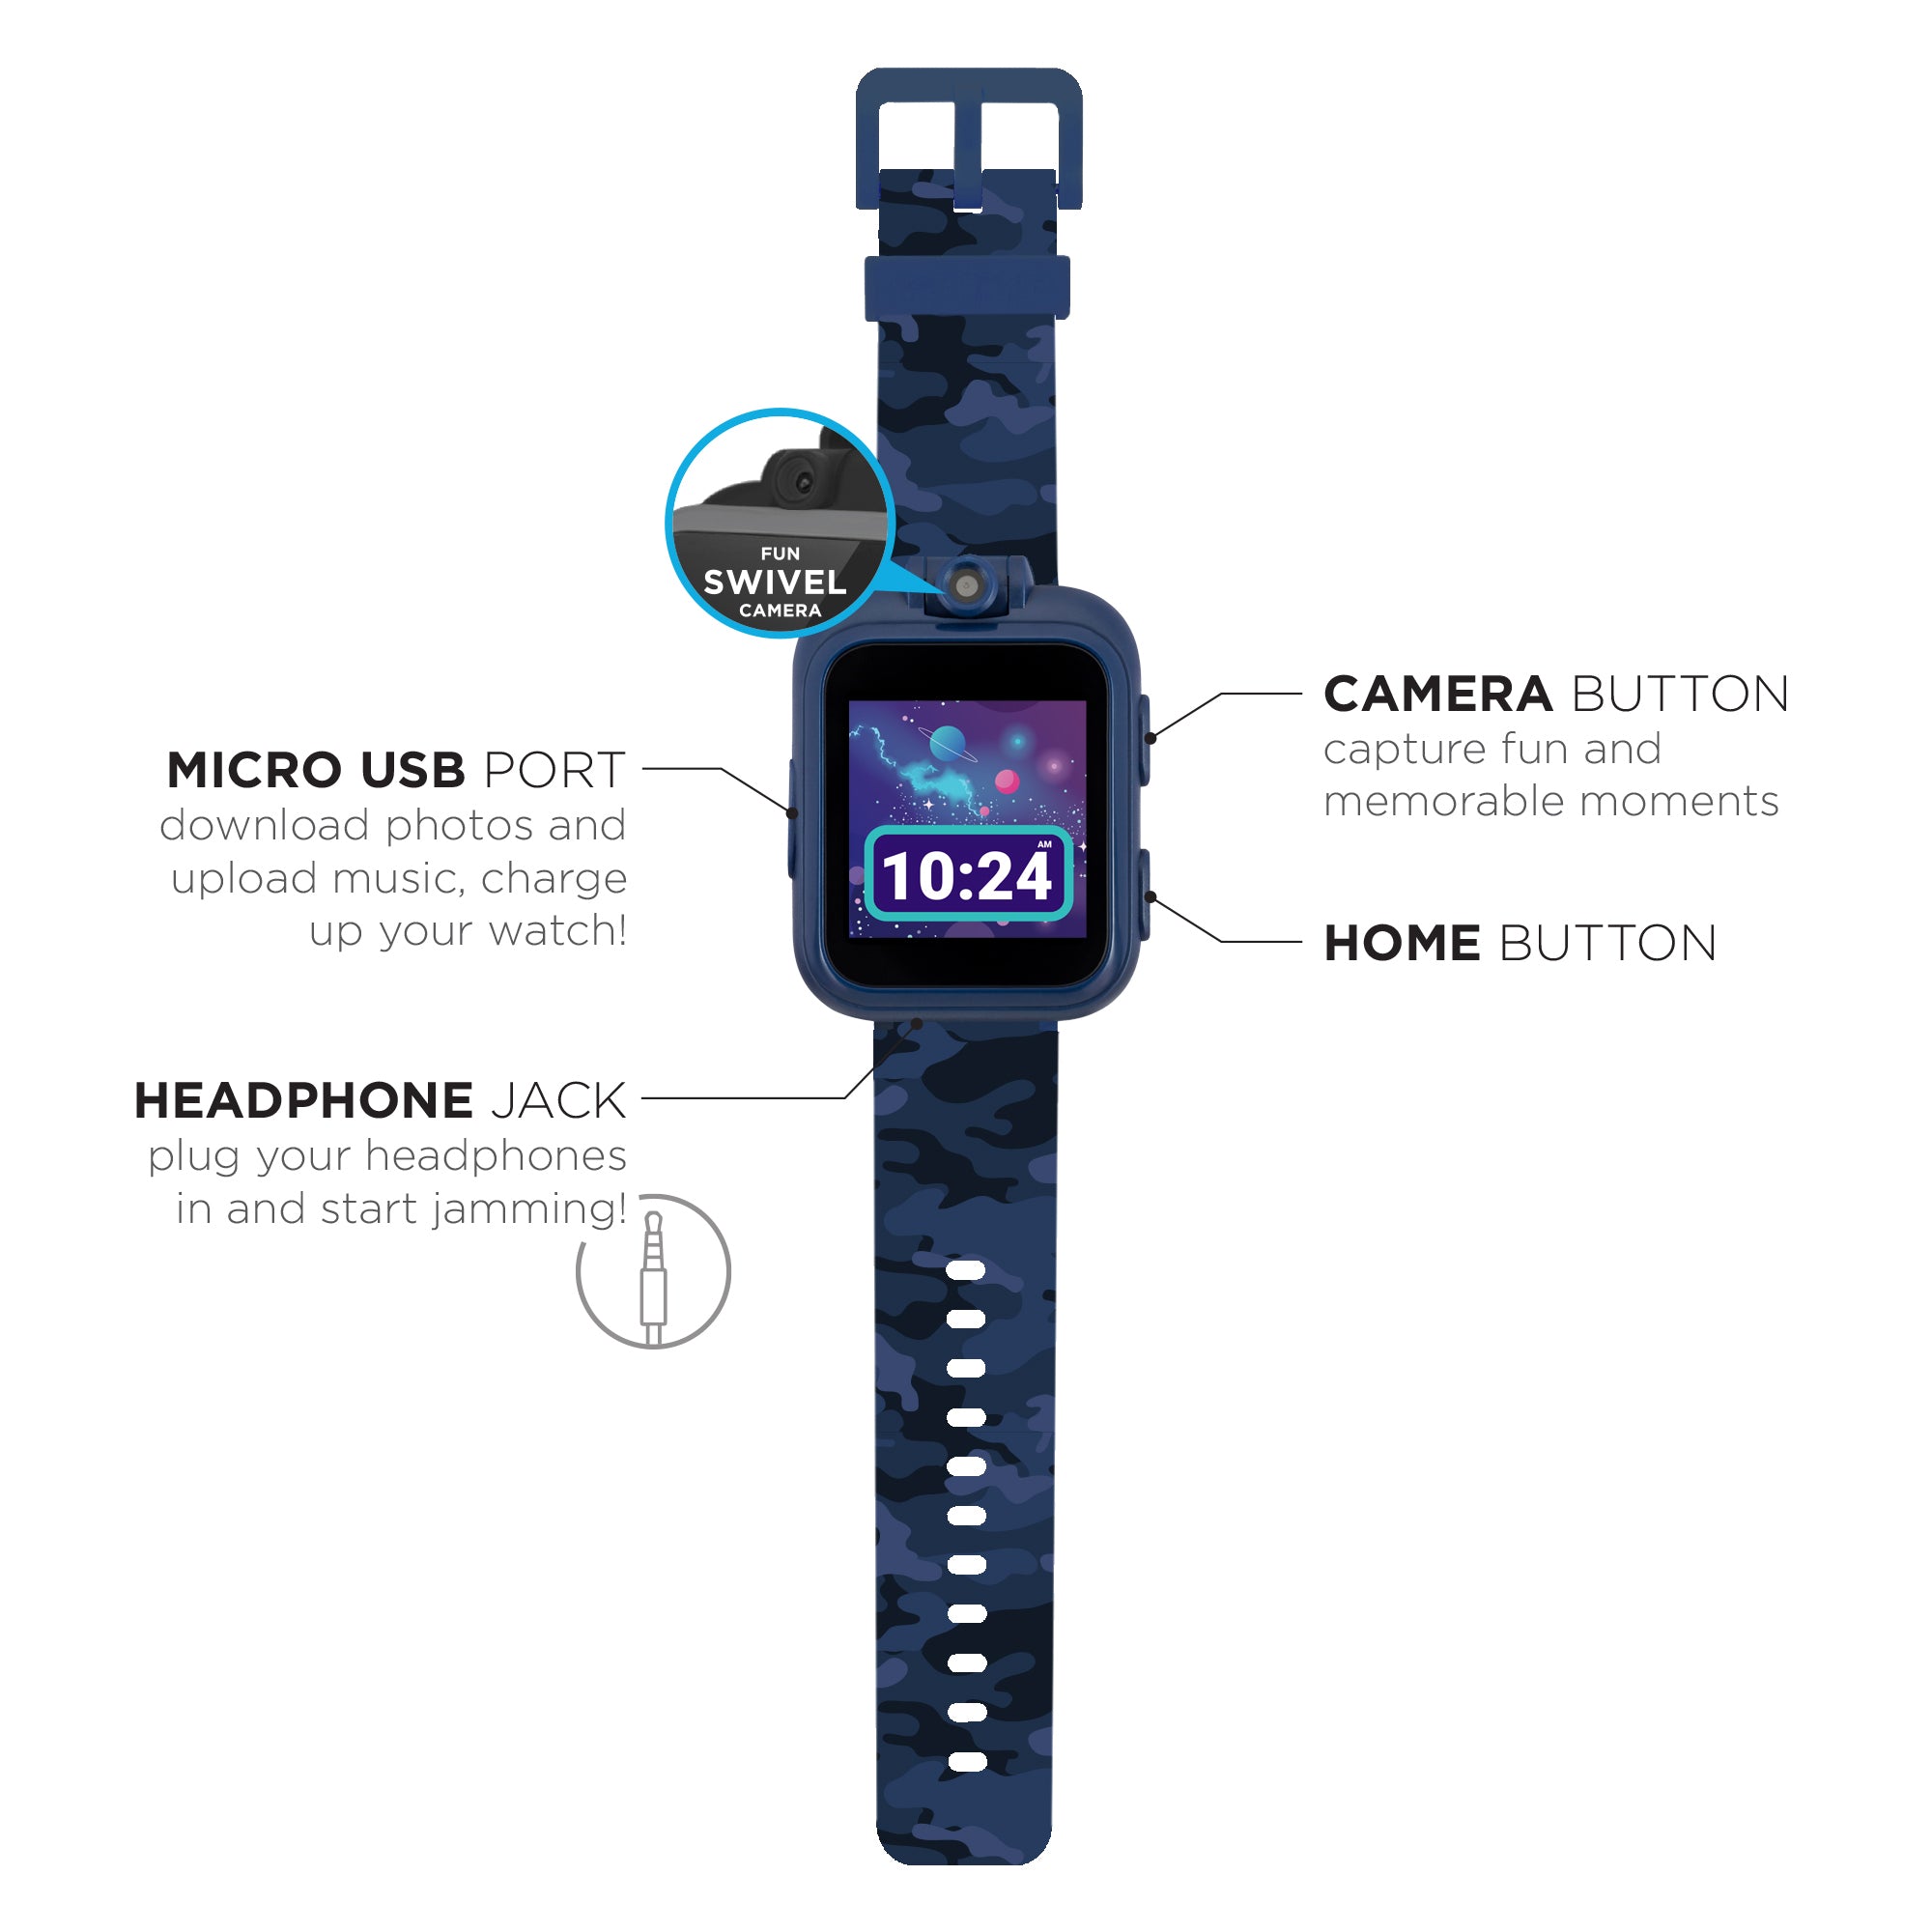 PlayZoom 2 Kids Smartwatch & Earbuds Set: Blue Camouflage Print